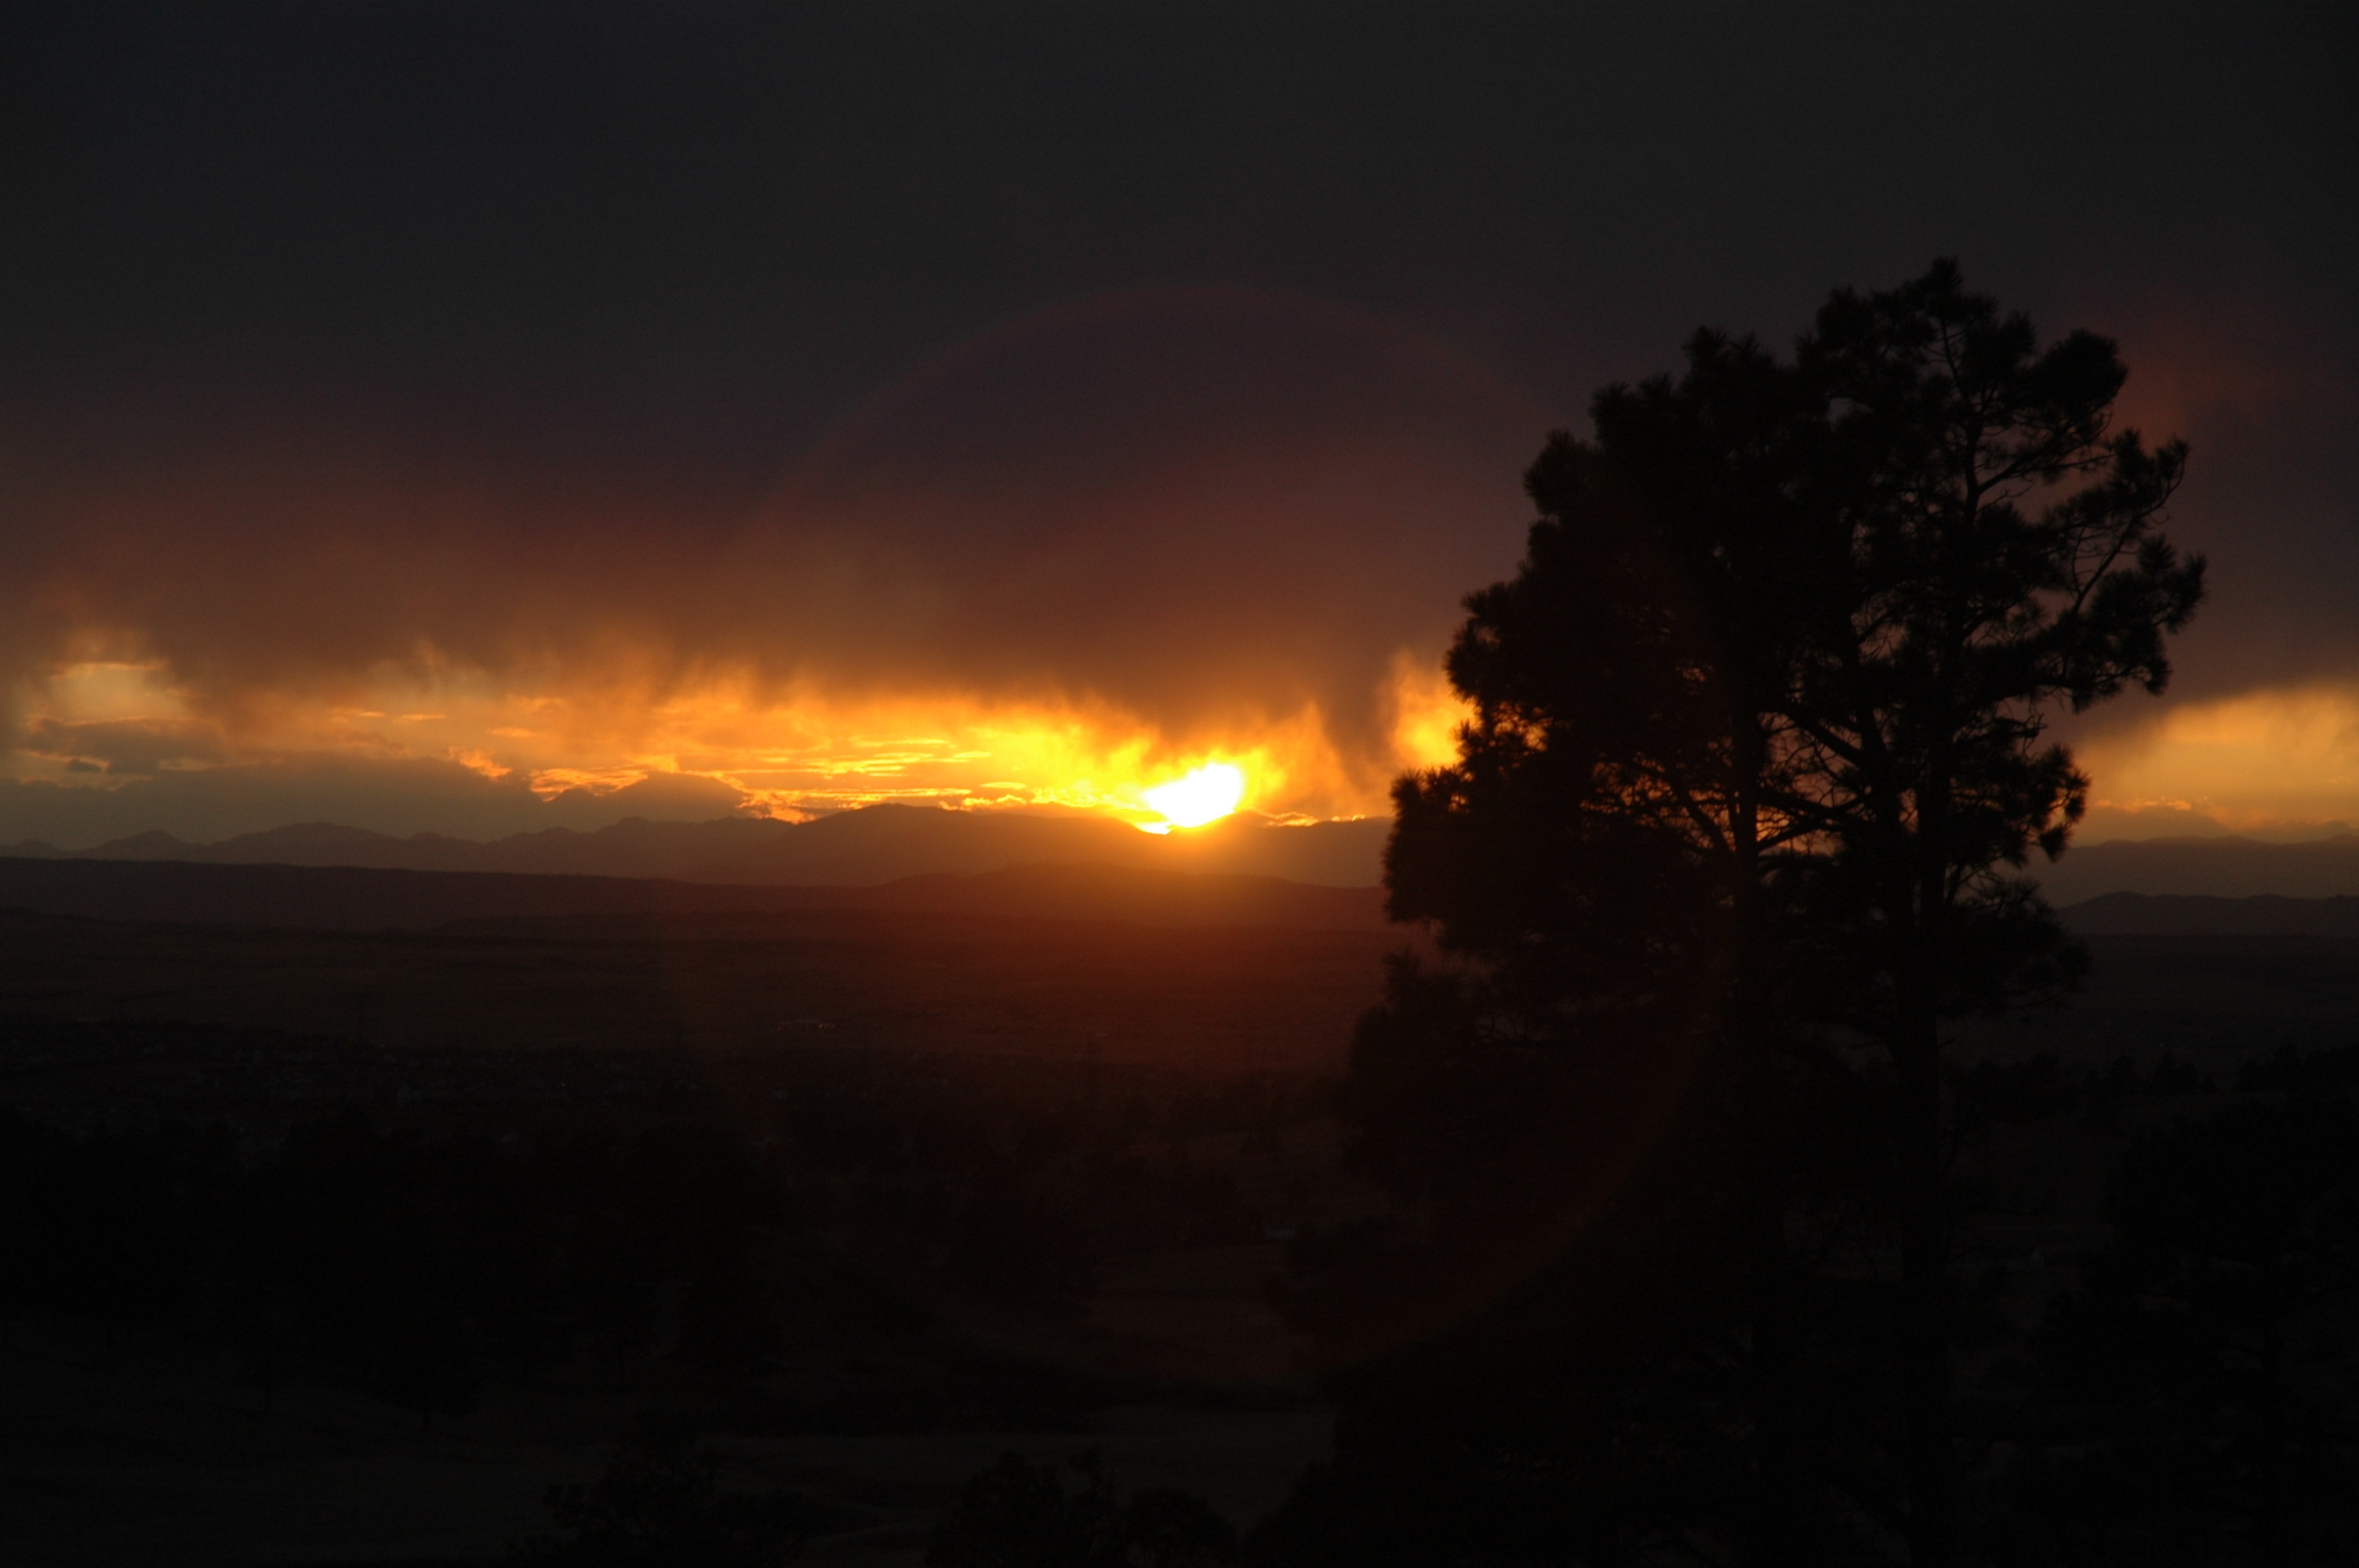 1680 x 1050, 1440 x 900, 1280 x 1024, 1024 x 768 posted 12 / 01 / 07 keywords sunset, fall, rain, clouds, mountains, Rockies, Colorado